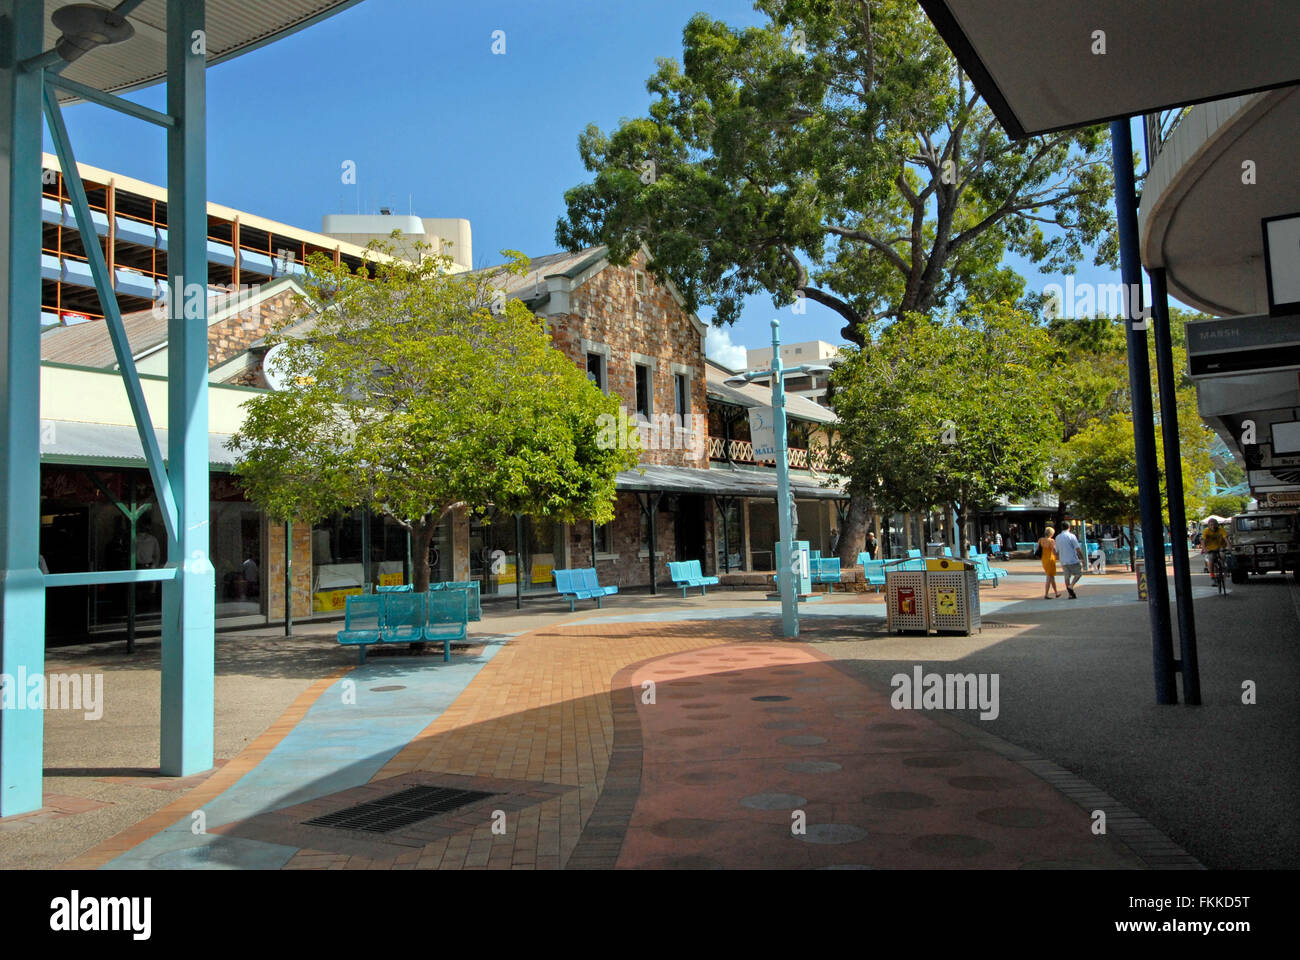 The Mall in downtown Darwin Australia Stock Photo